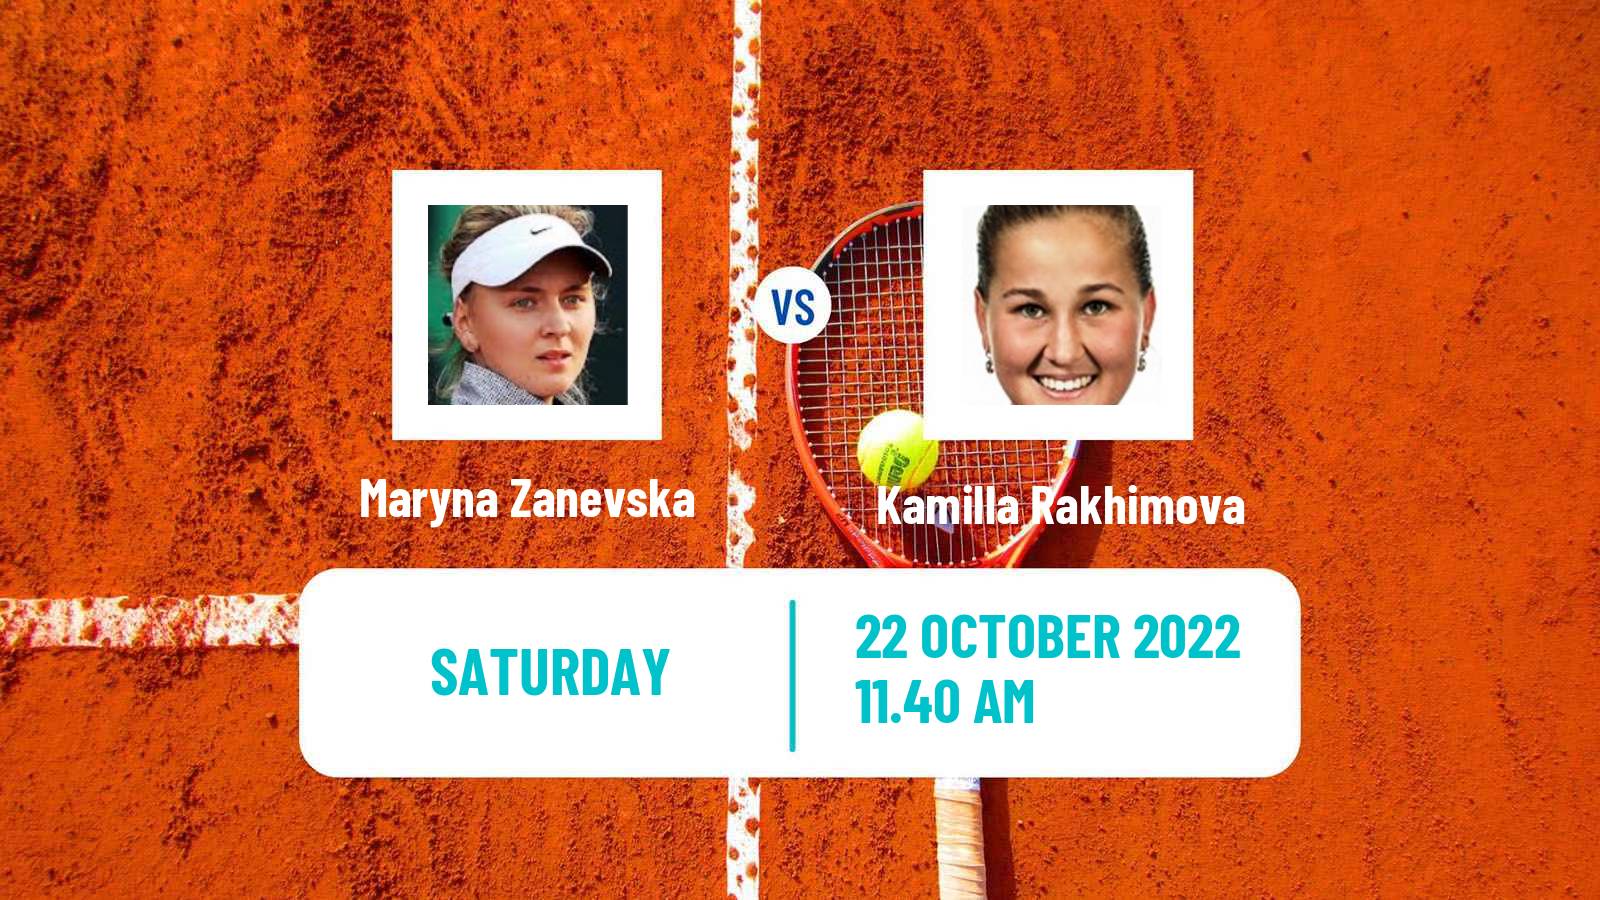 Tennis ATP Challenger Maryna Zanevska - Kamilla Rakhimova